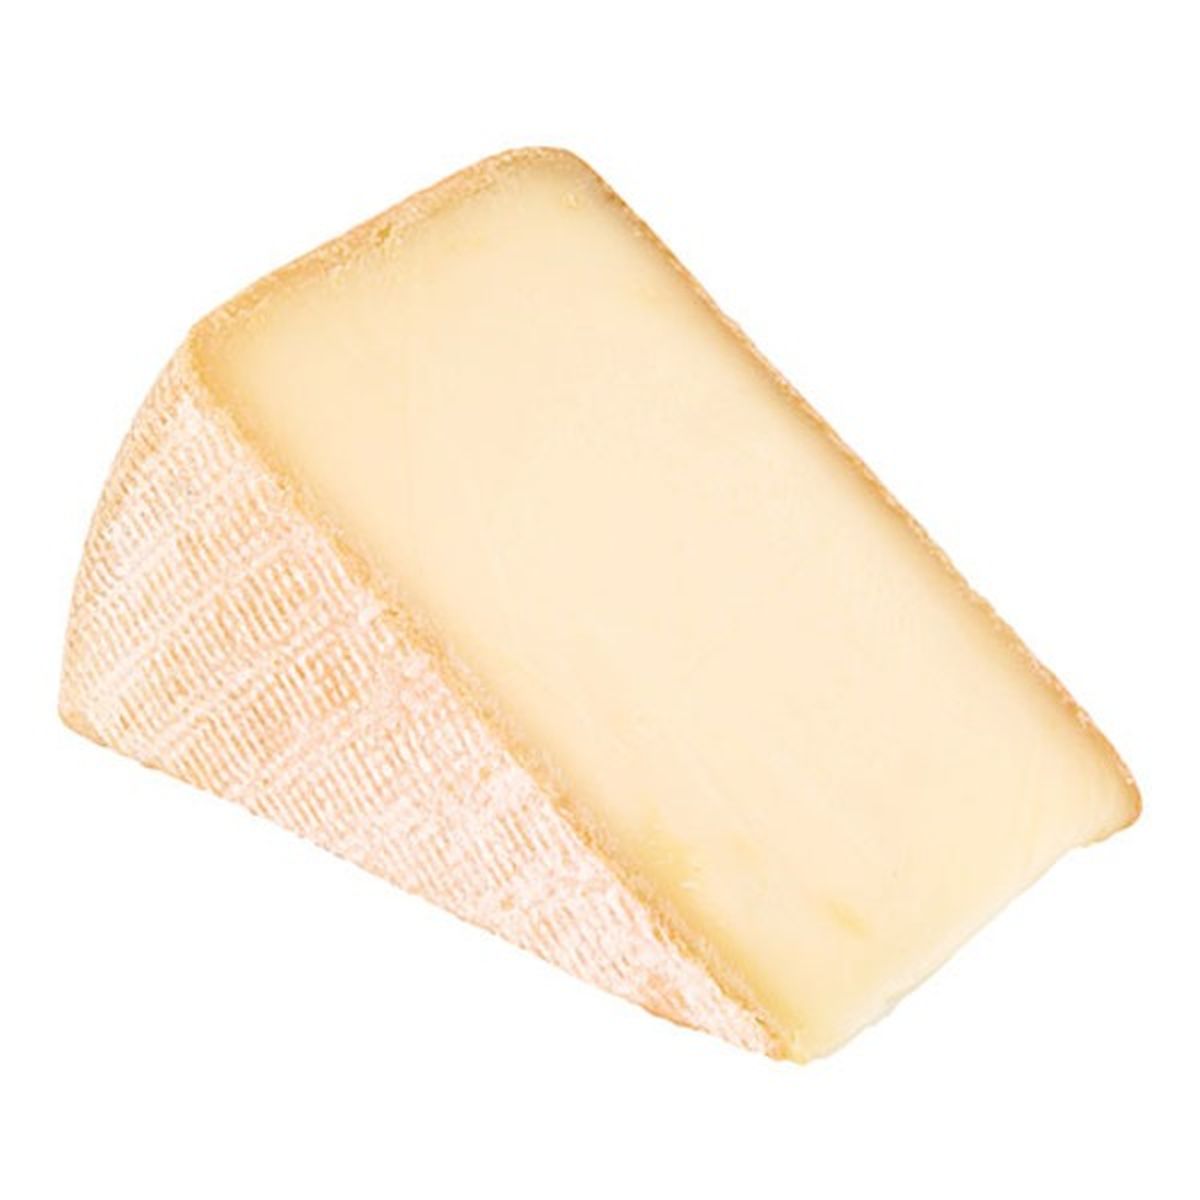 Calories in Wegmans Full Ver-Monty Cheese